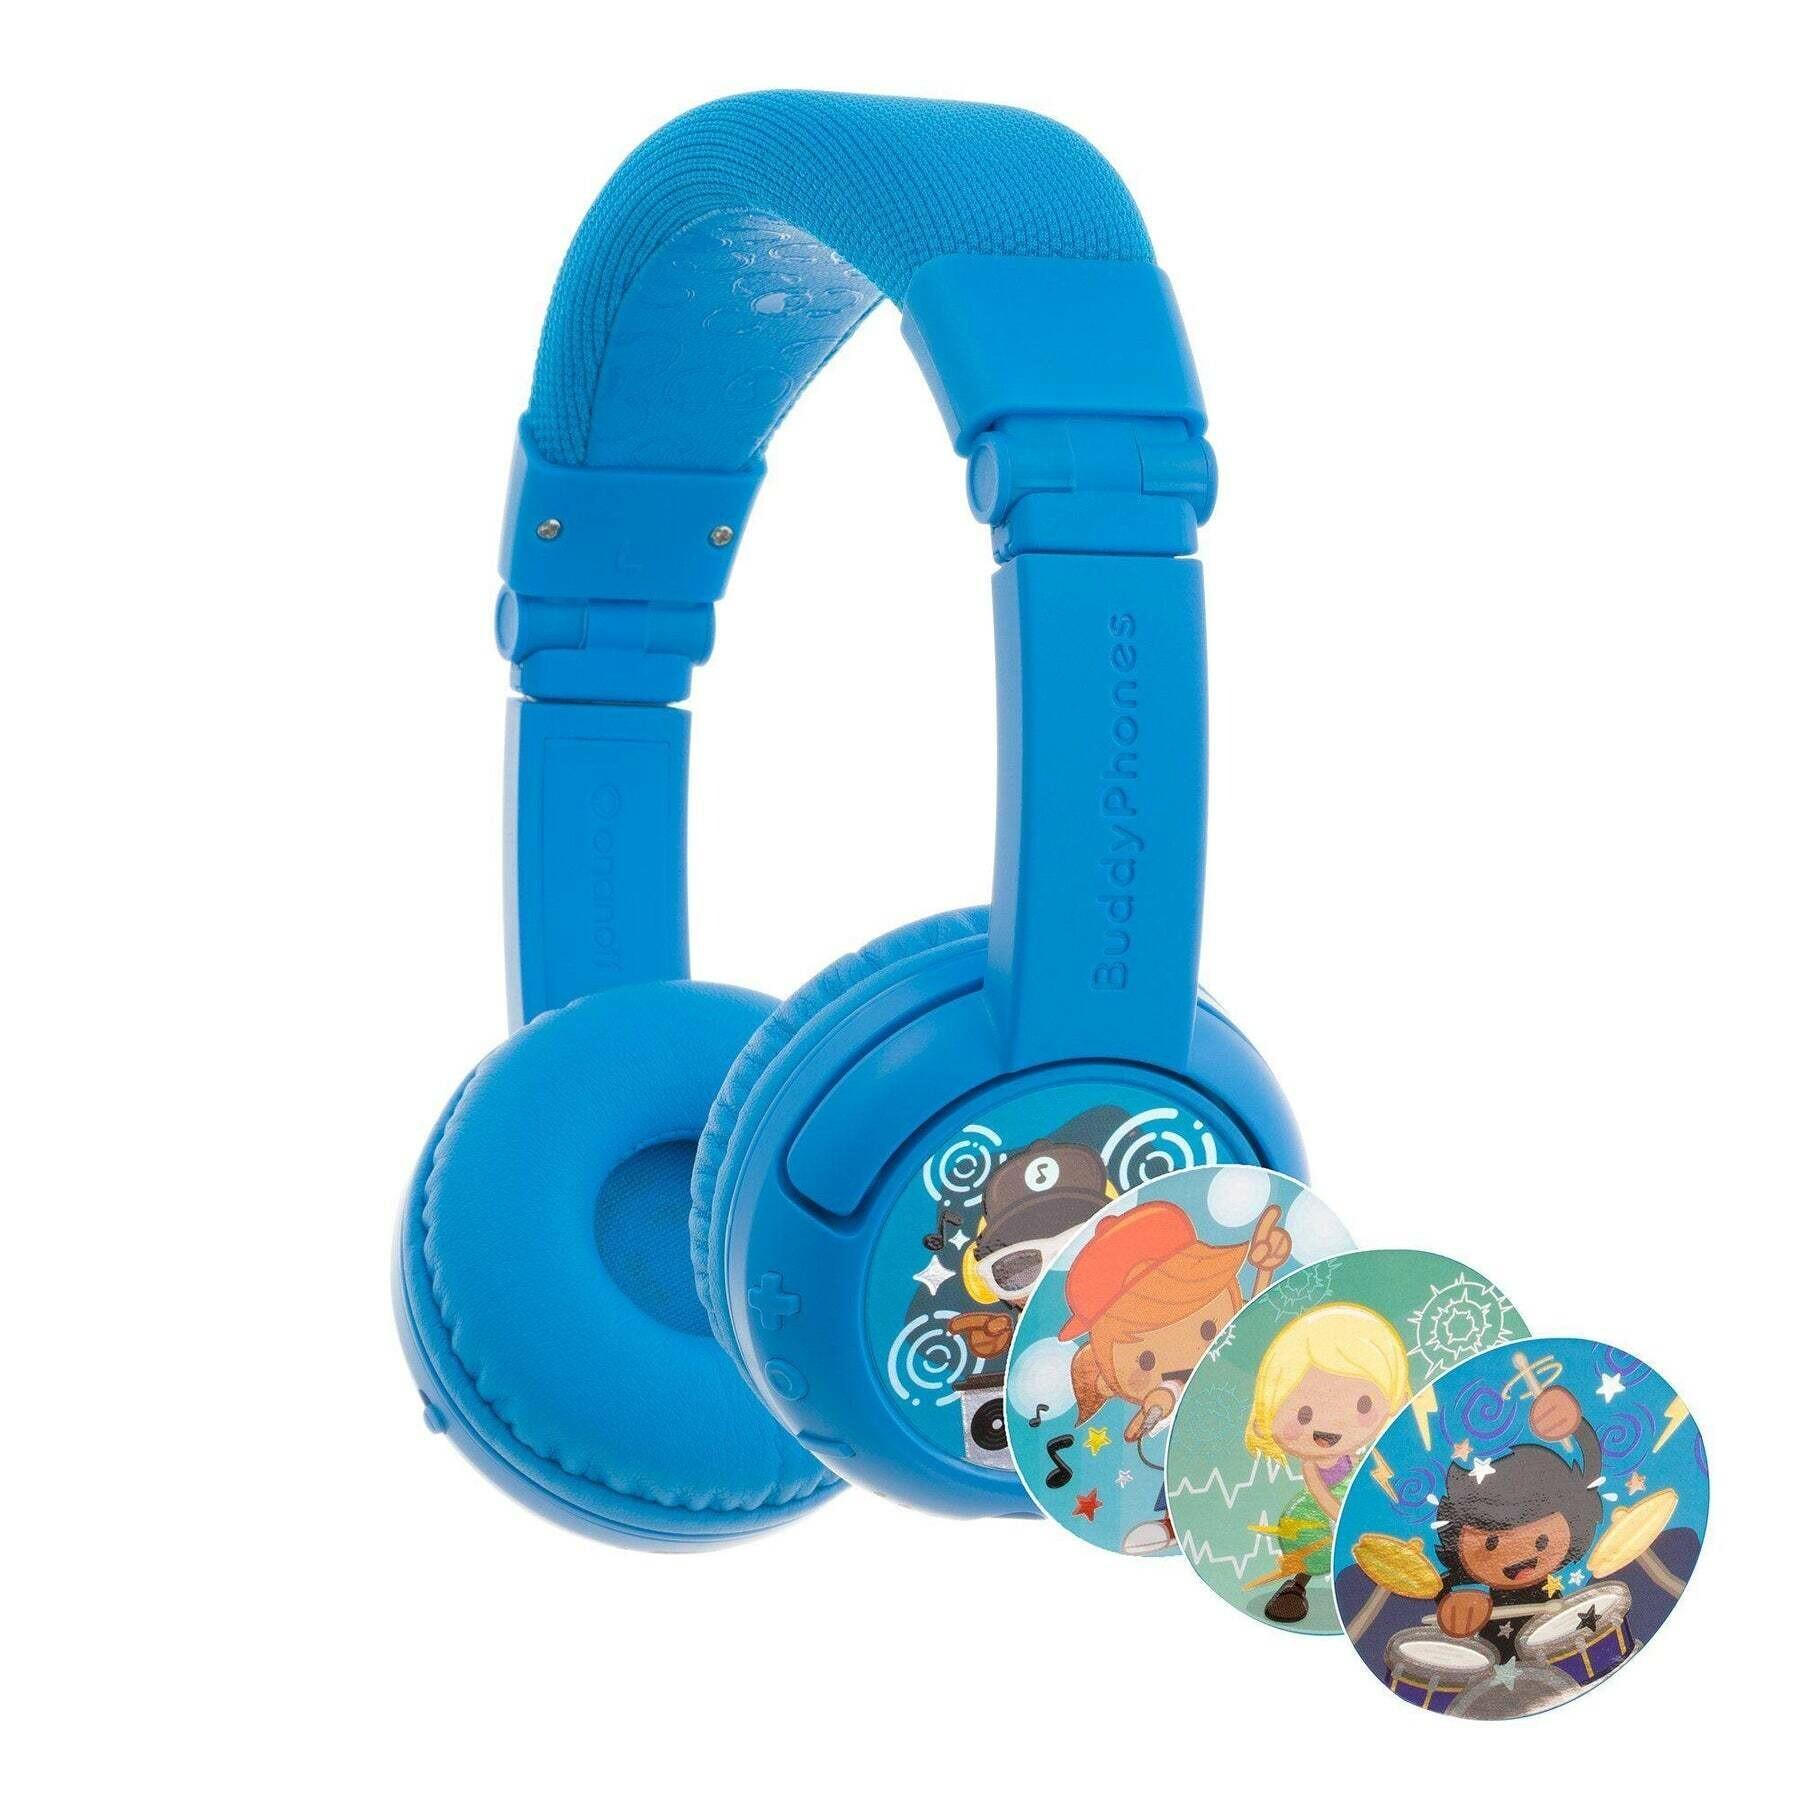 Children's wireless headphones BuddyPhones Play Plus